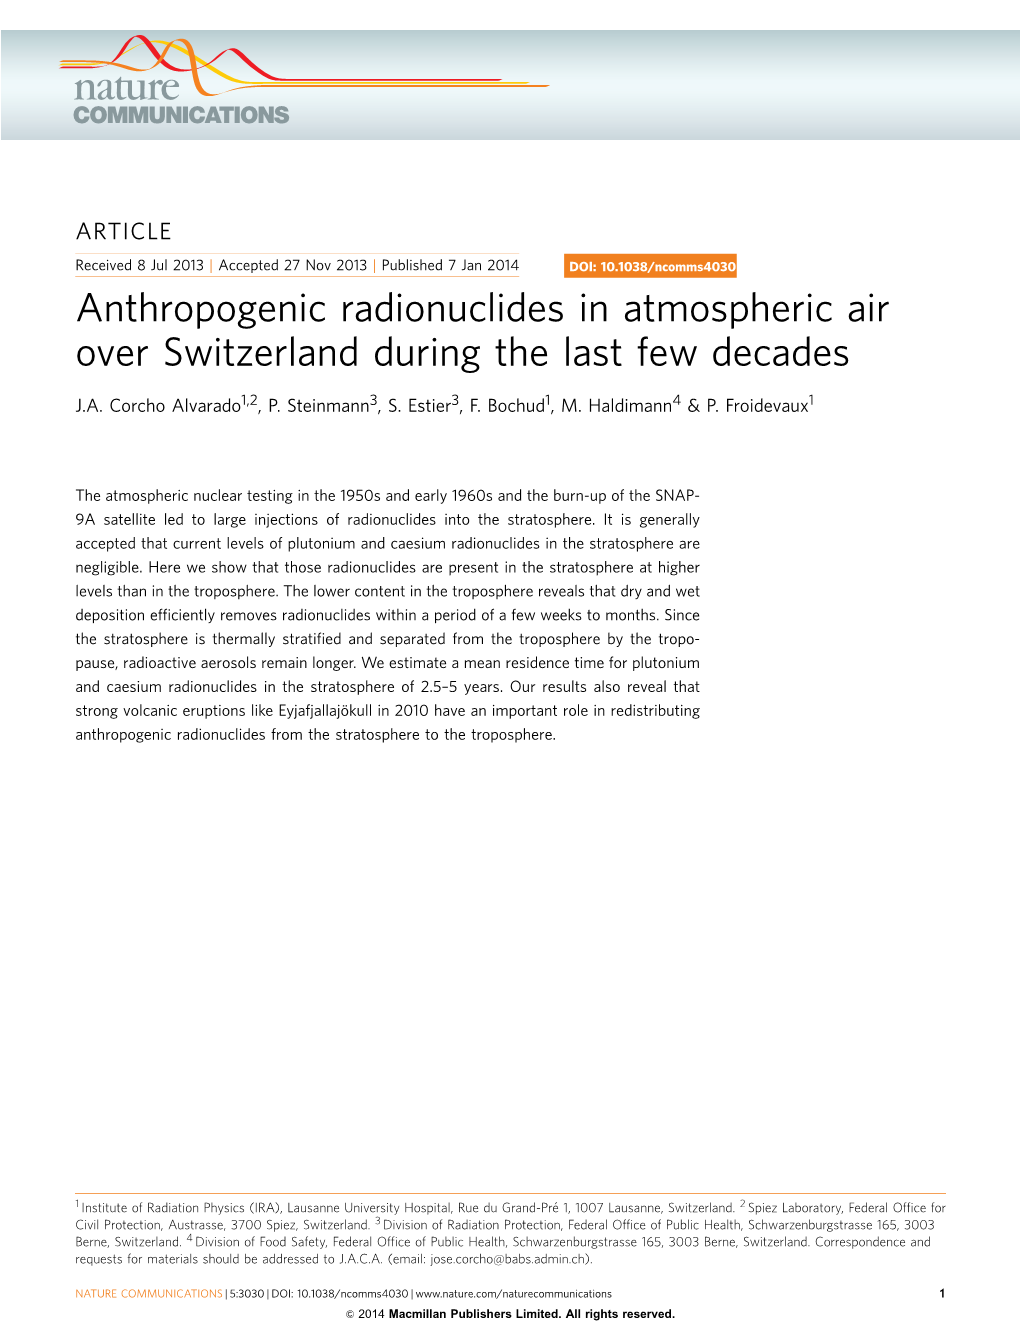 Anthropogenic Radionuclides in Atmospheric Air Over Switzerland During the Last Few Decades